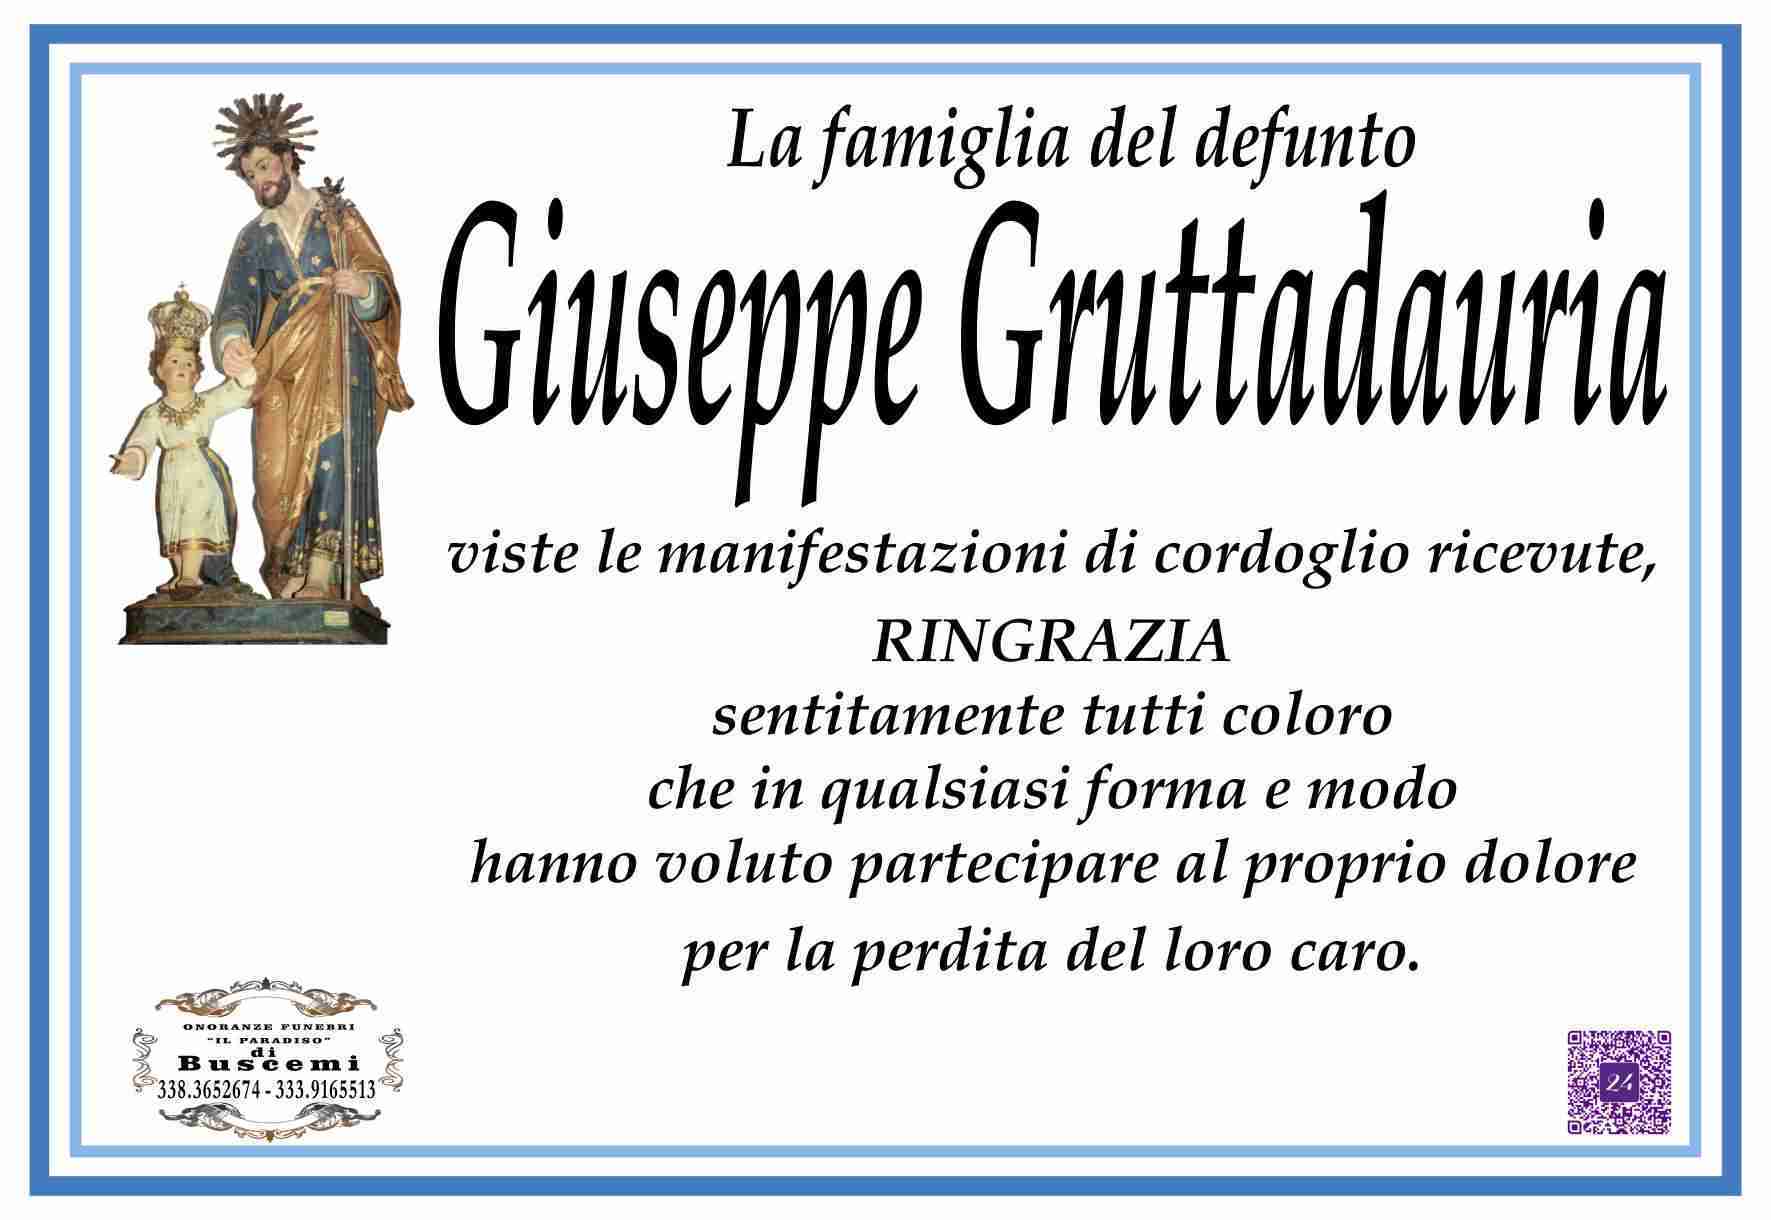 Giuseppe Gruttadauria